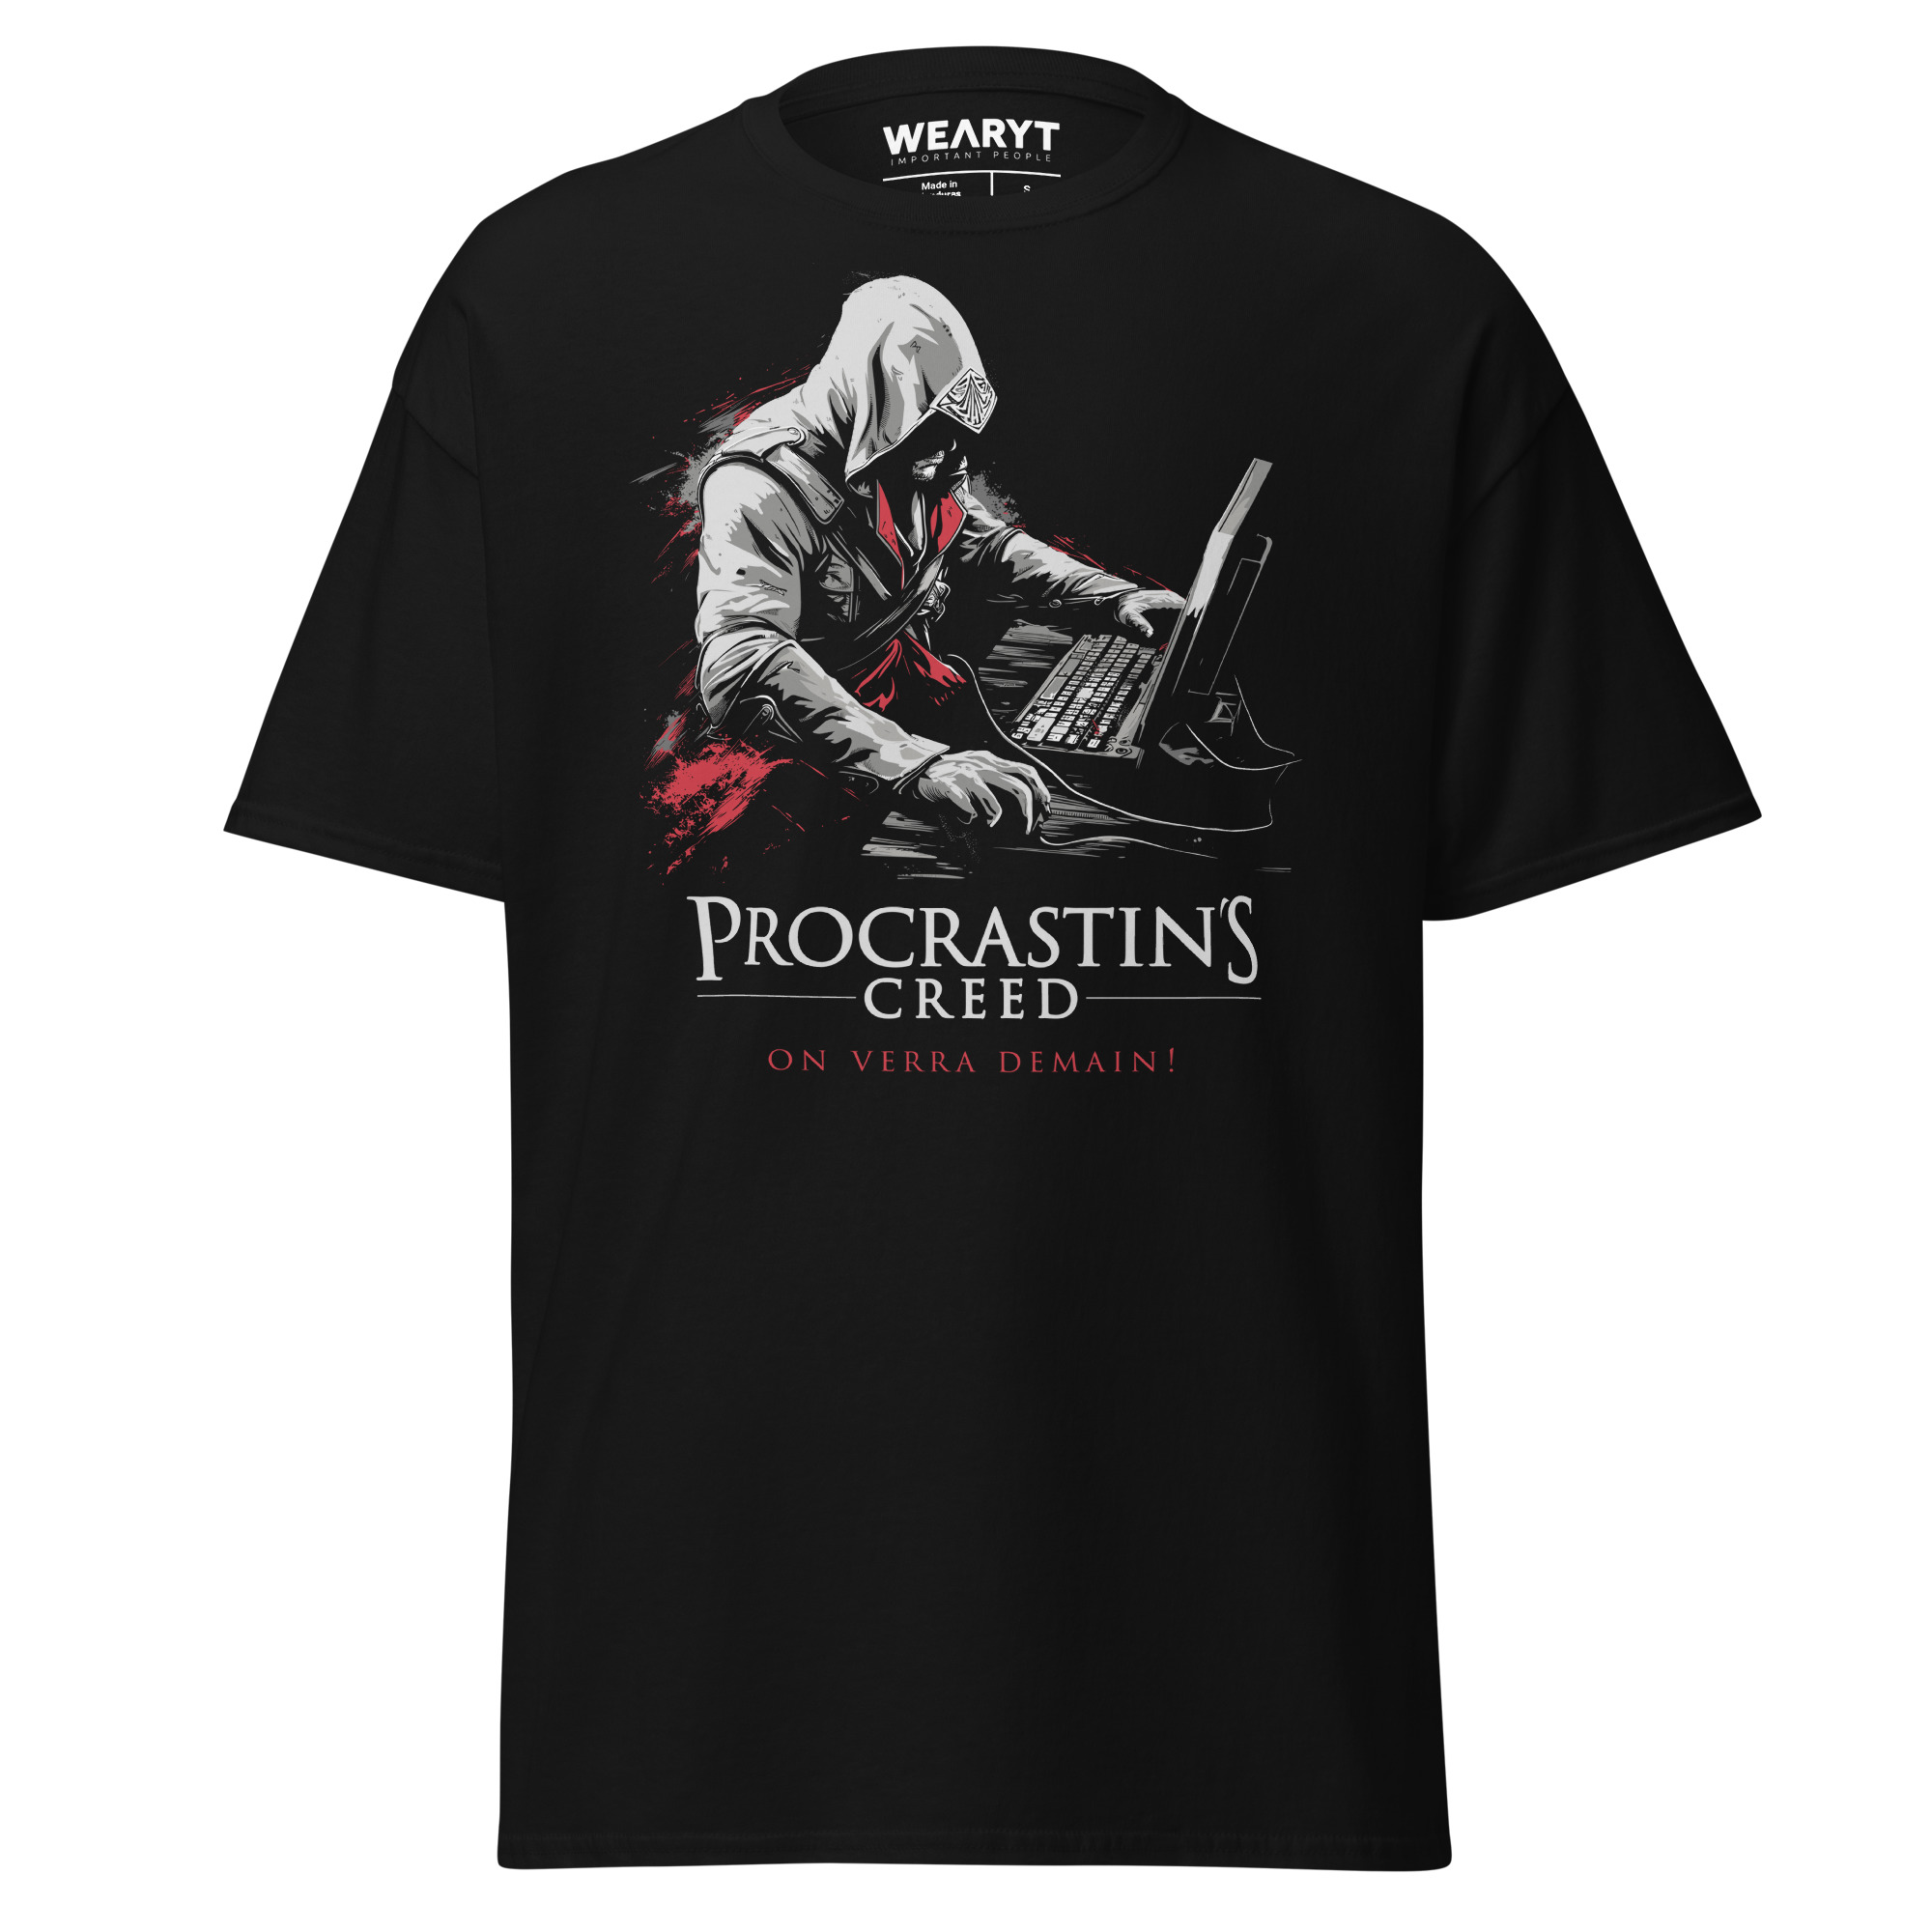 T-shirt – Gaming – Switzerland’s Battlegrounds T-Shirts Wearyt